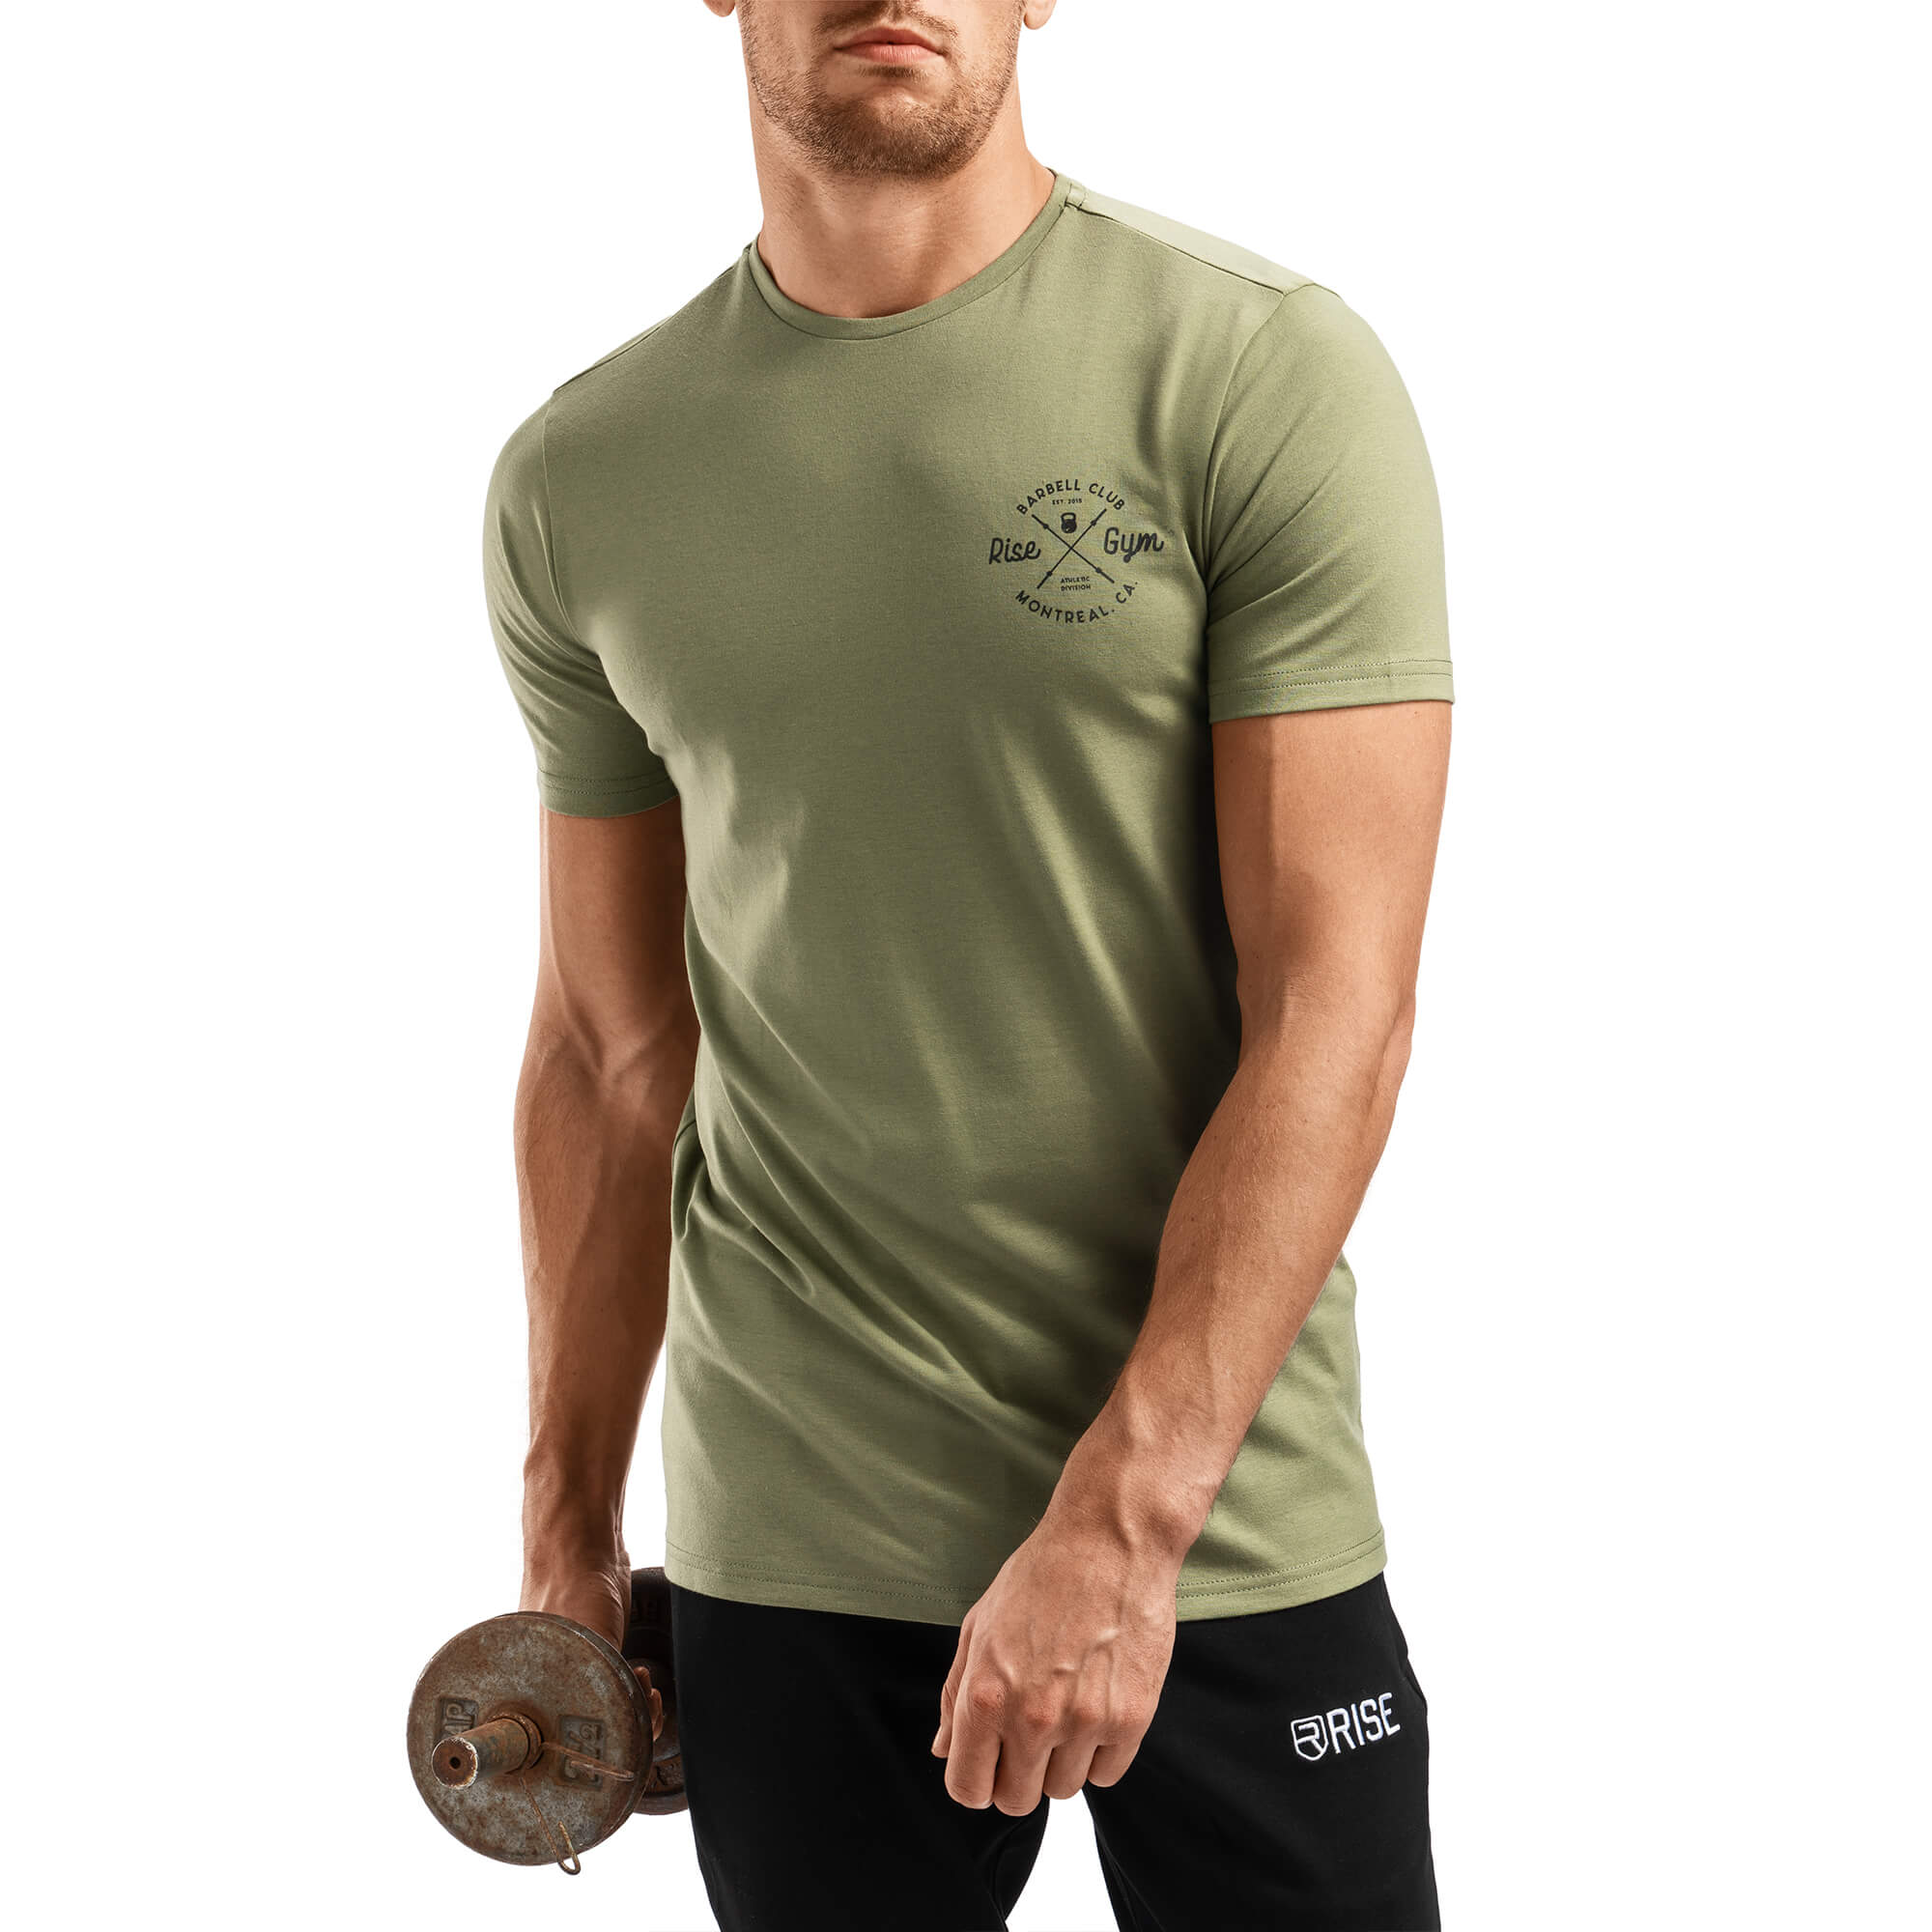 Barbell Club Shirt - Army Green